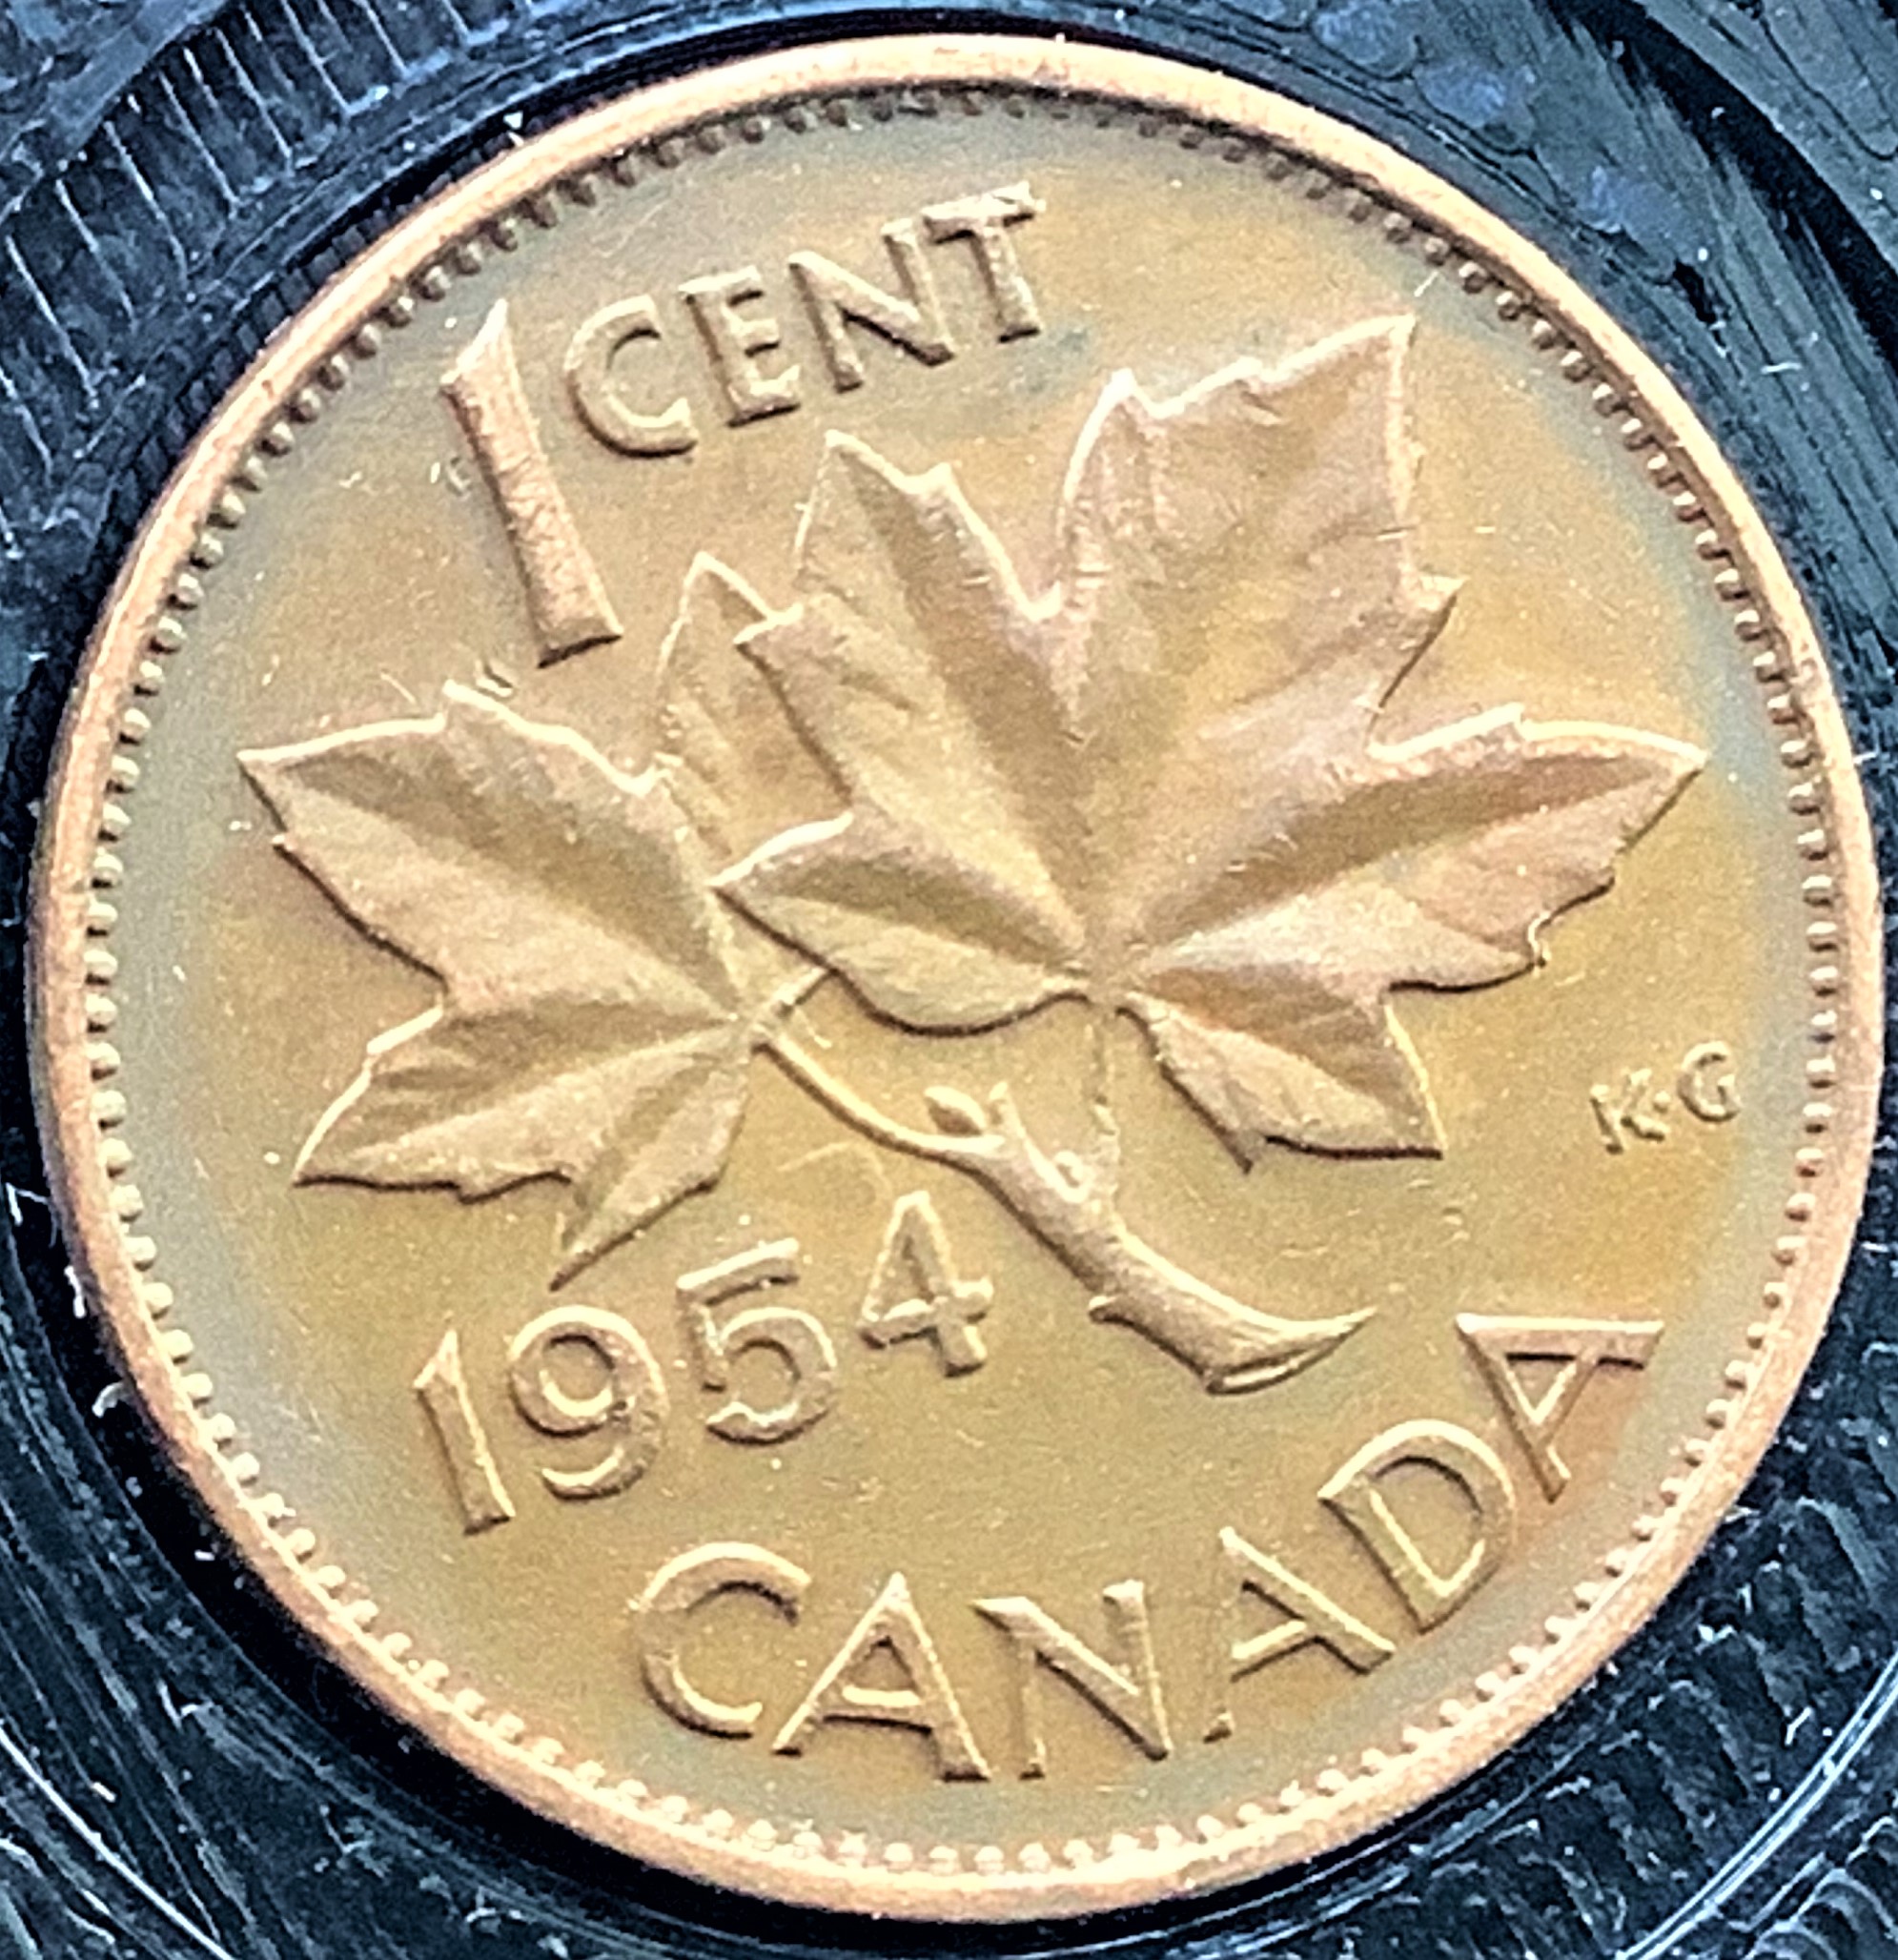 1 cent 1954 hanging IC54-5.jpg